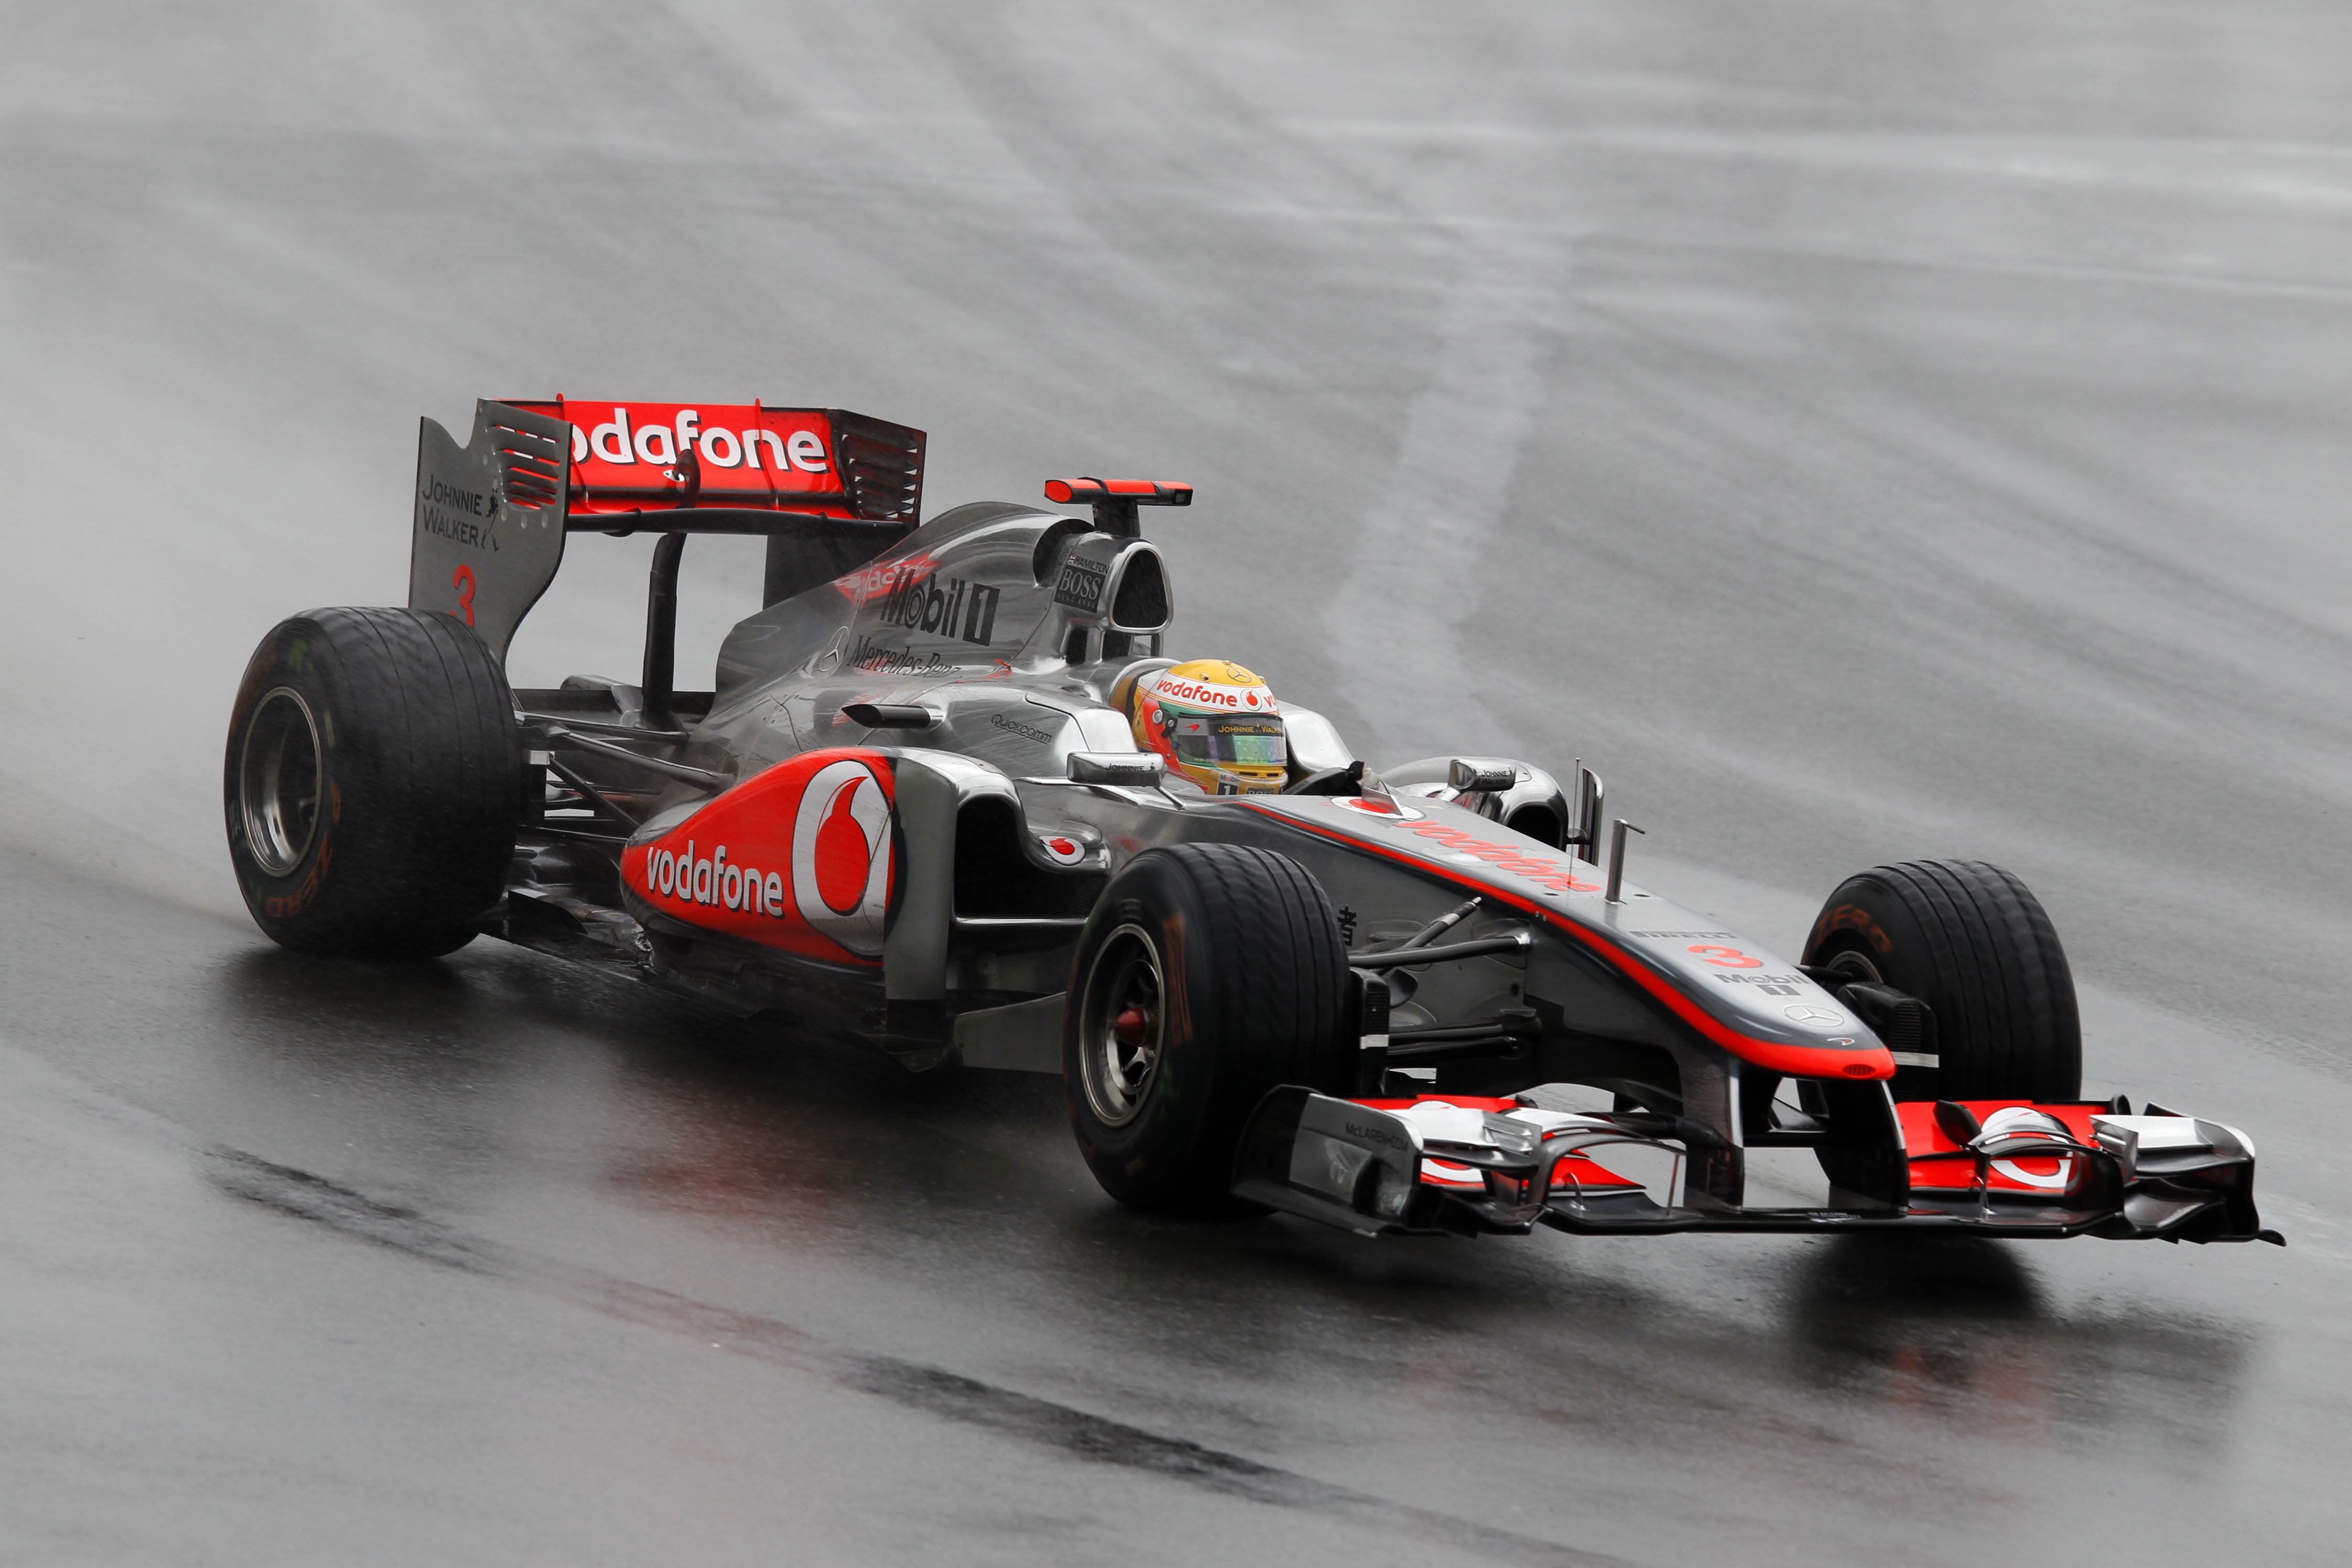 red and black go kart, rain, Canada, 2011, mclaren, Grand Prix